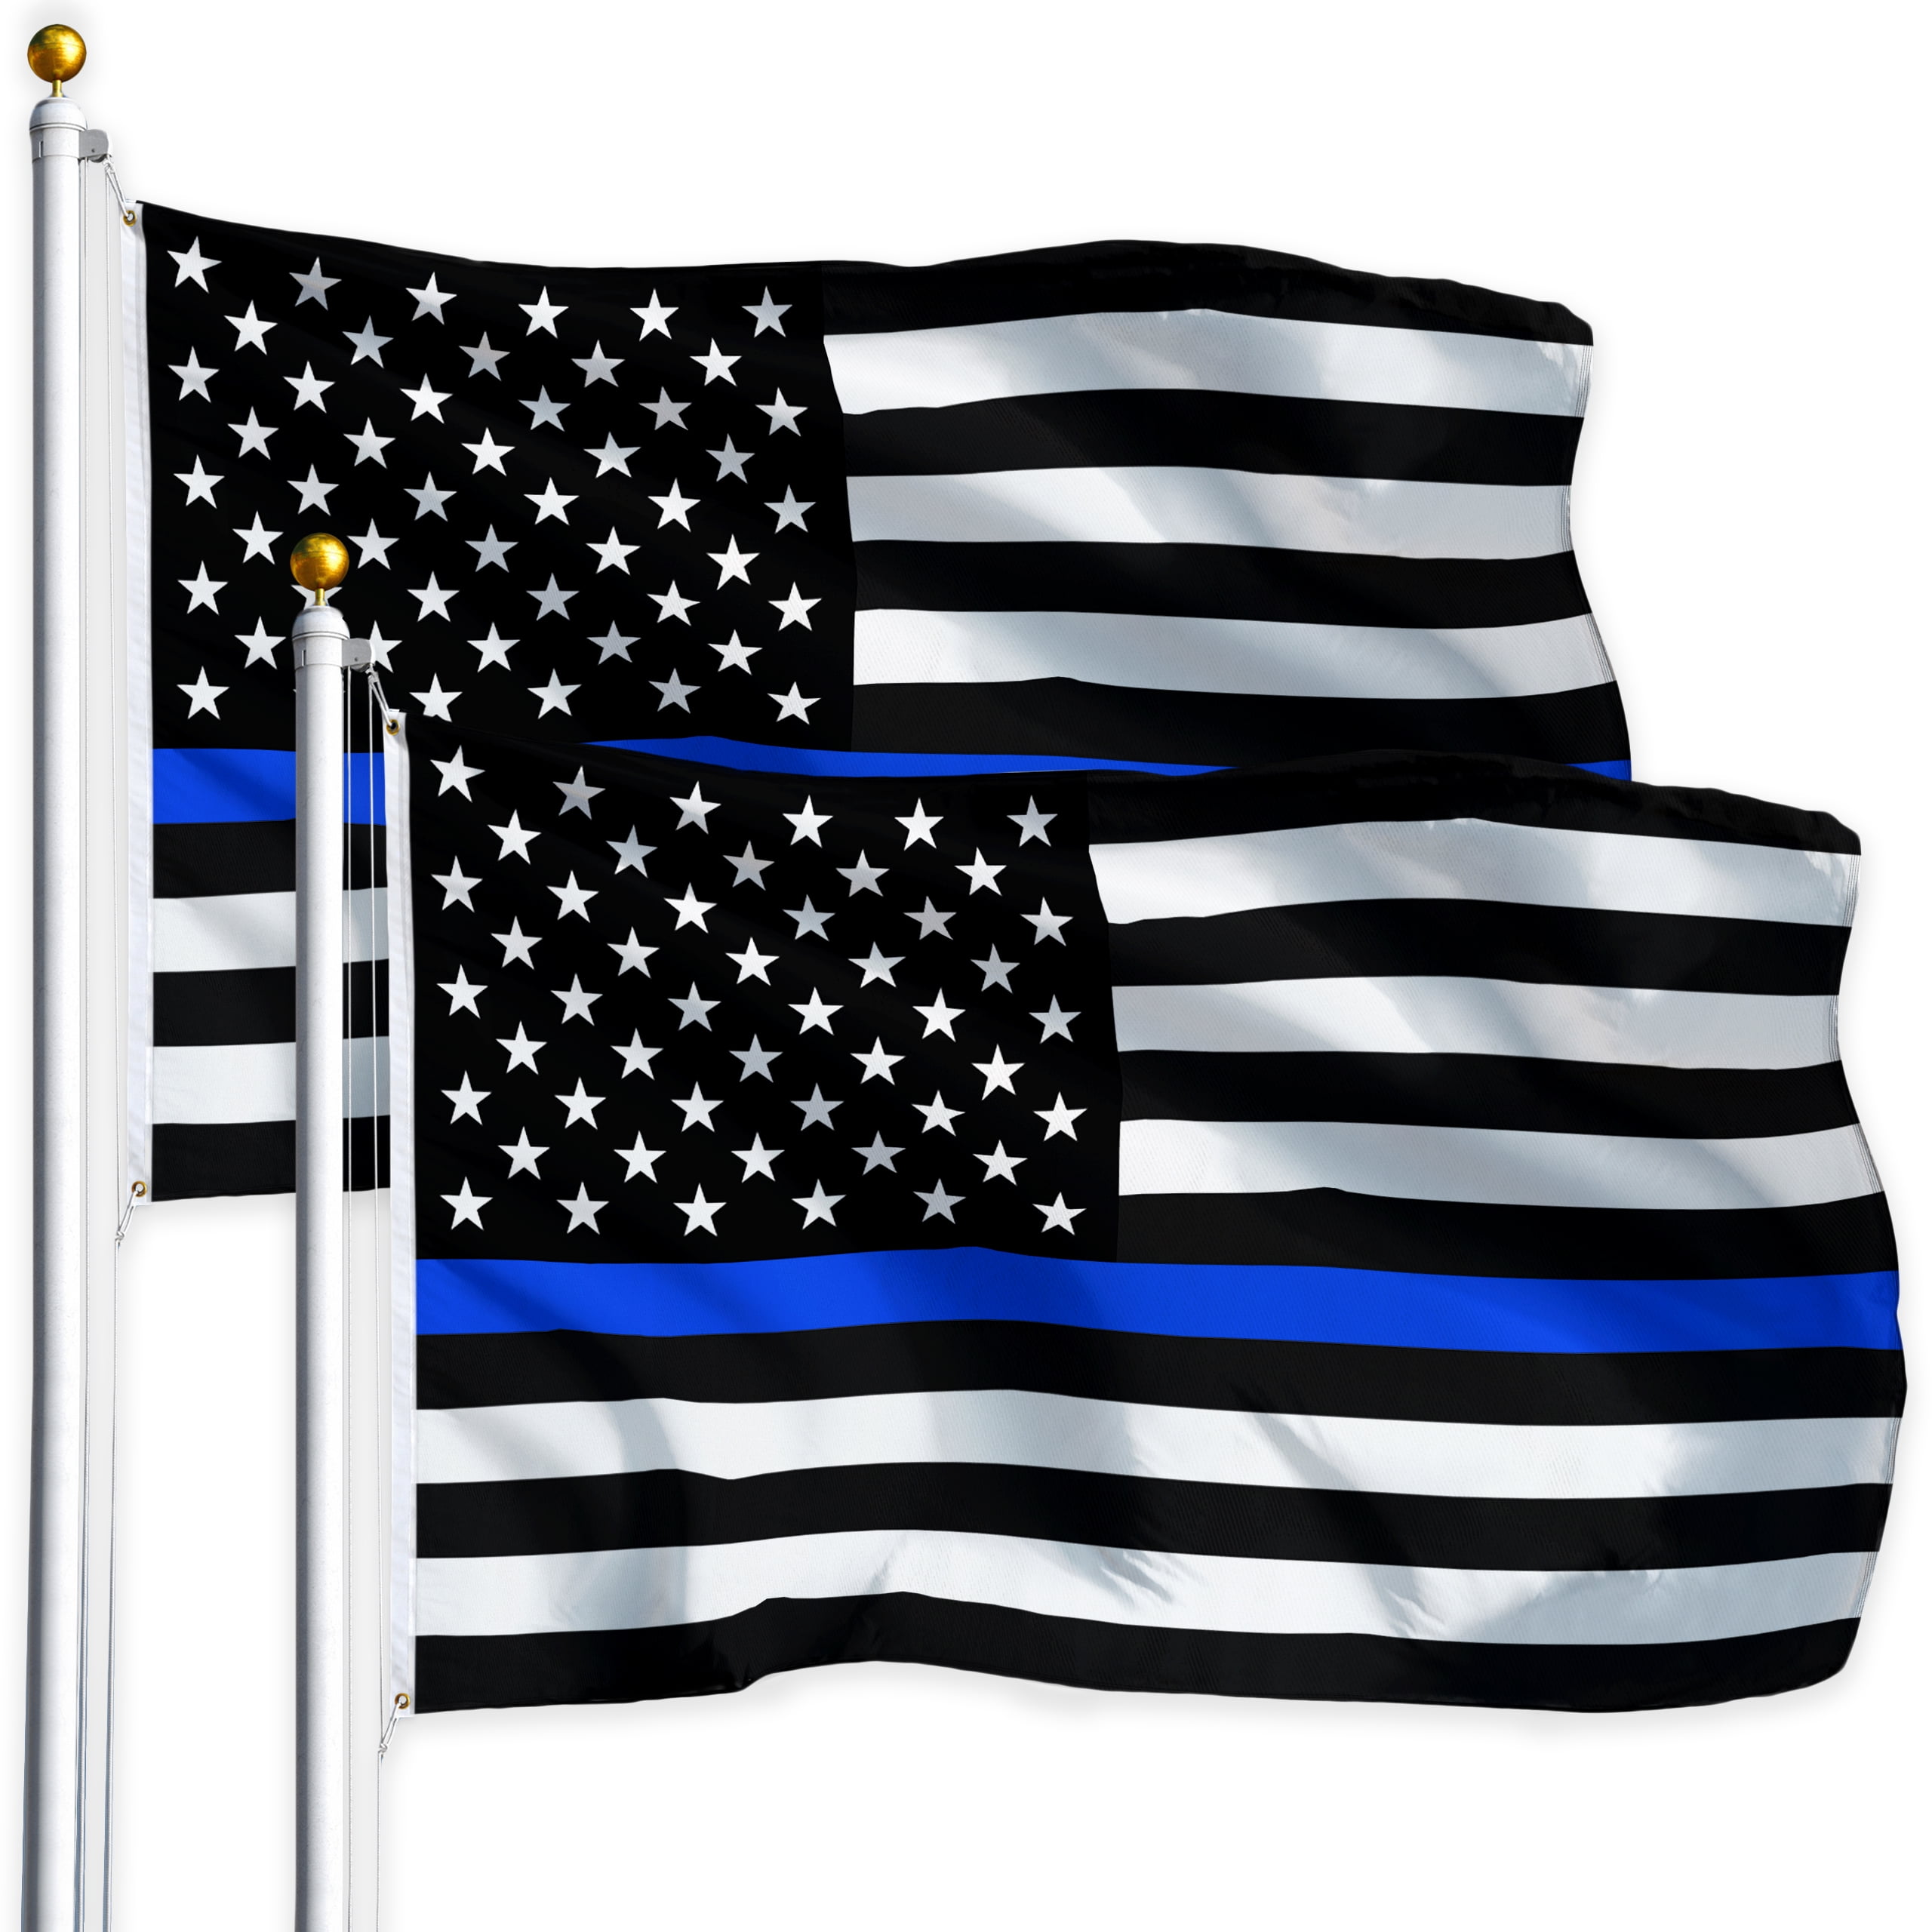 USA Thin Blue Line Police Memorial Premium Rough Tex Nylon 2x3 2'x3' Flag